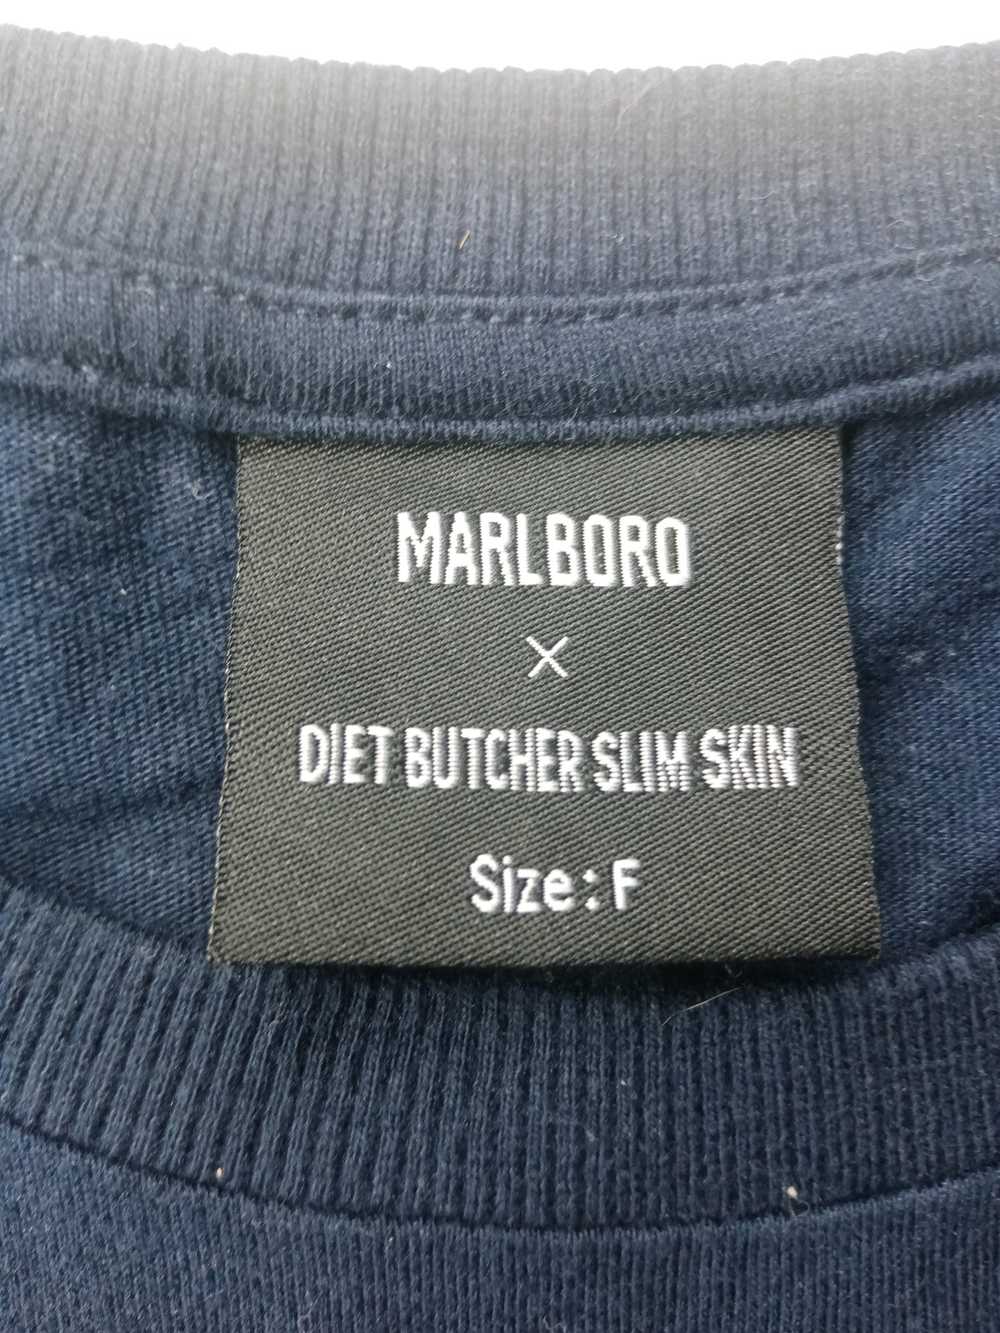 Diet Butcher Slim Skin × Japanese Brand × Marlbor… - image 4